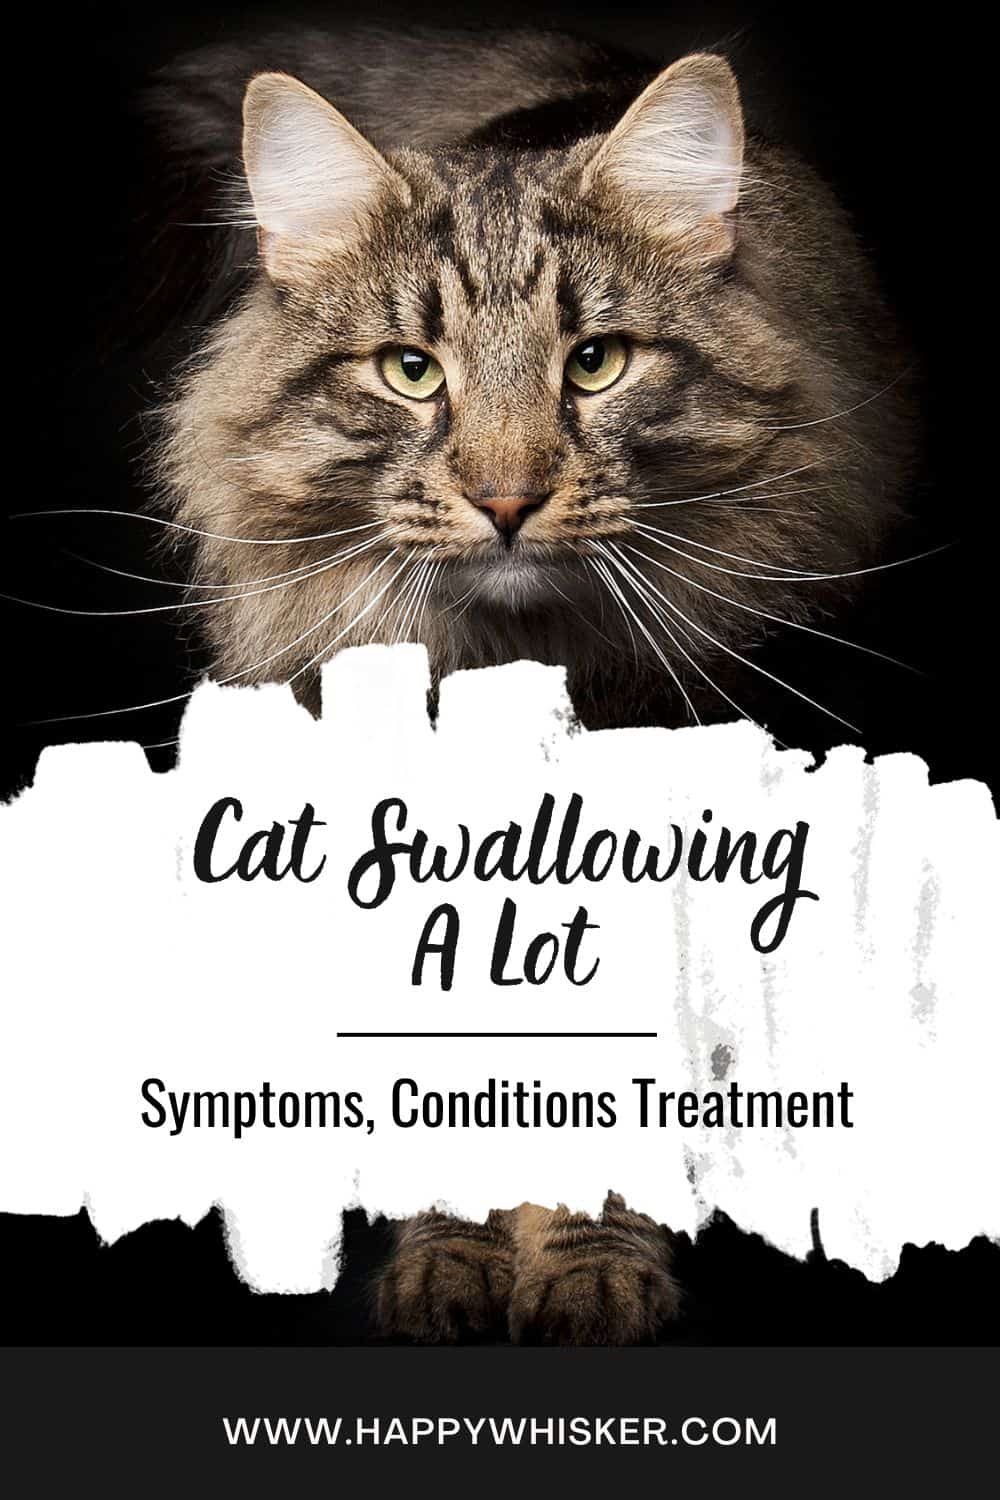 Cat Swallowing A Lot - Symptoms, Conditions Treatment Pinterest